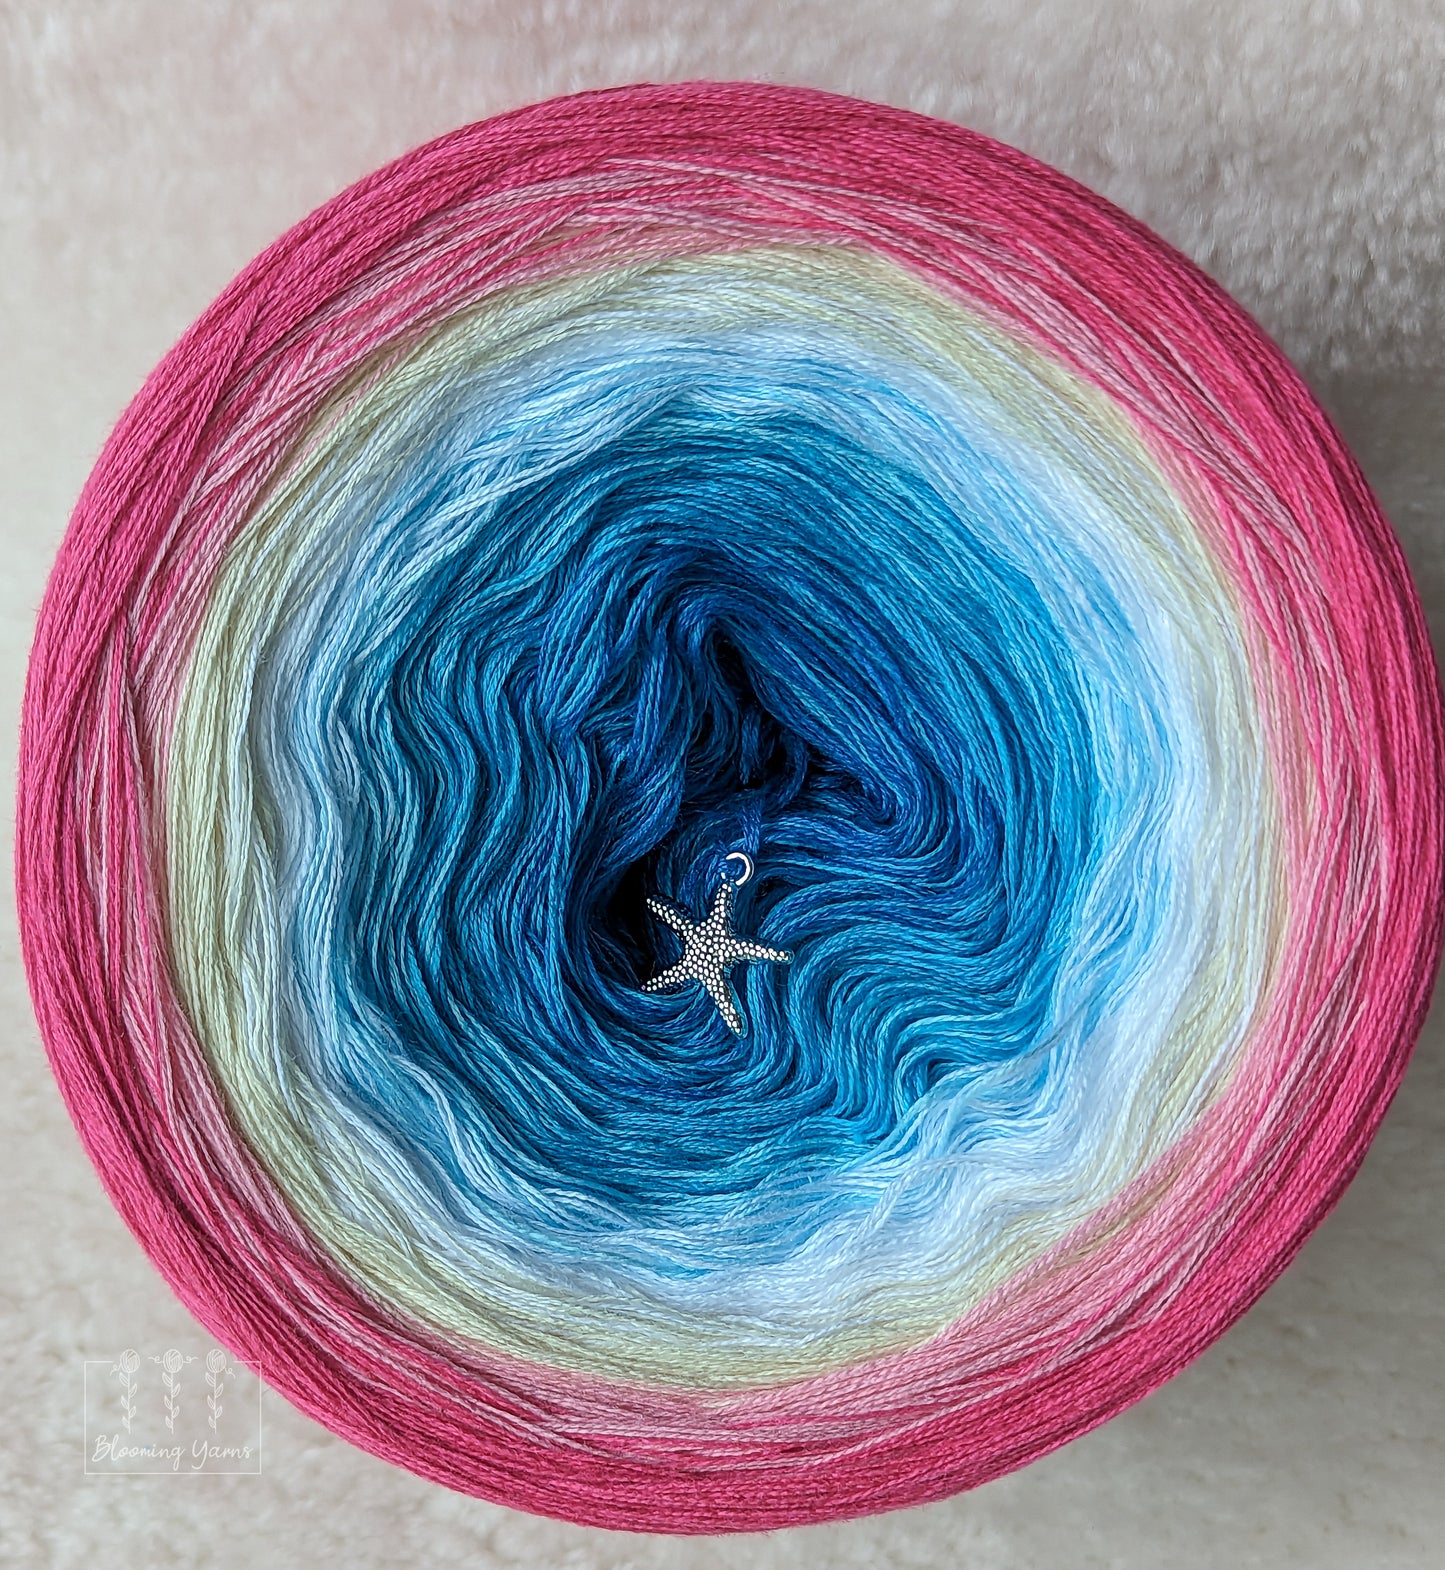 "Greek view" gradient ombre yarn cake created by Ancy-Fancy